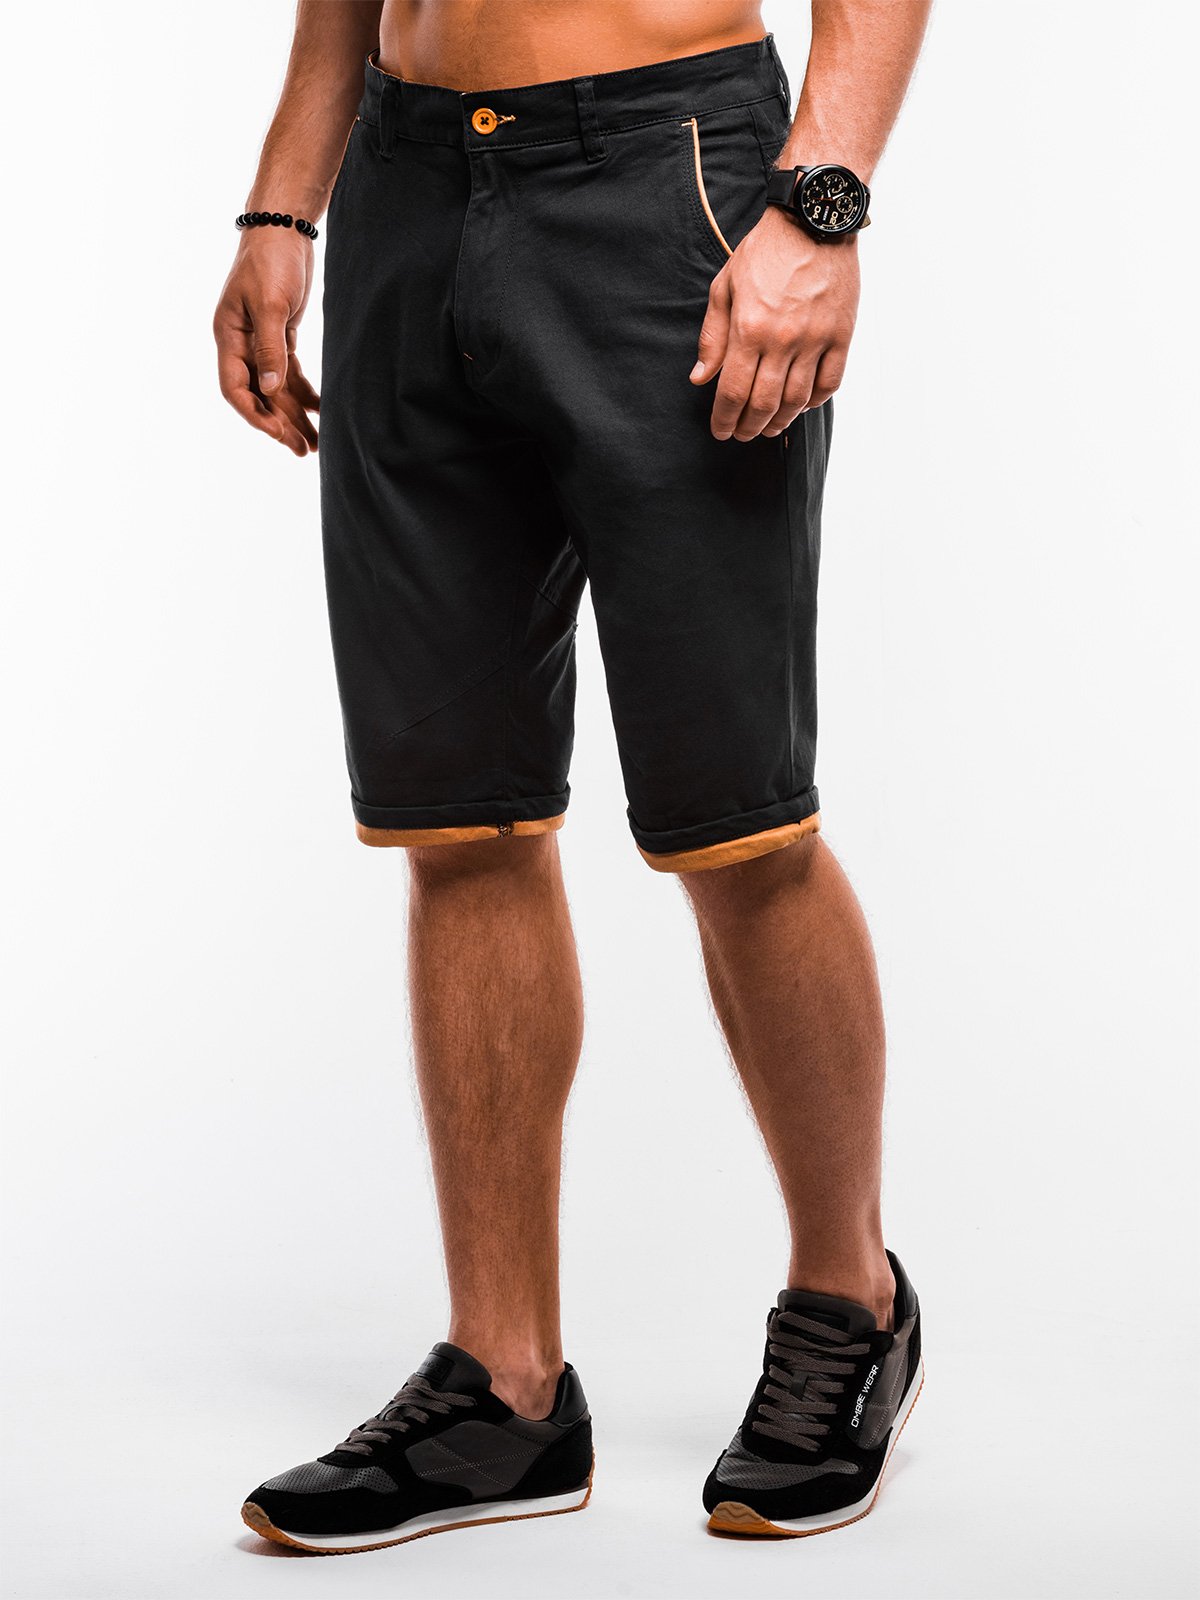 Men's chino shorts W150 - black | MODONE wholesale - Clothing For Men